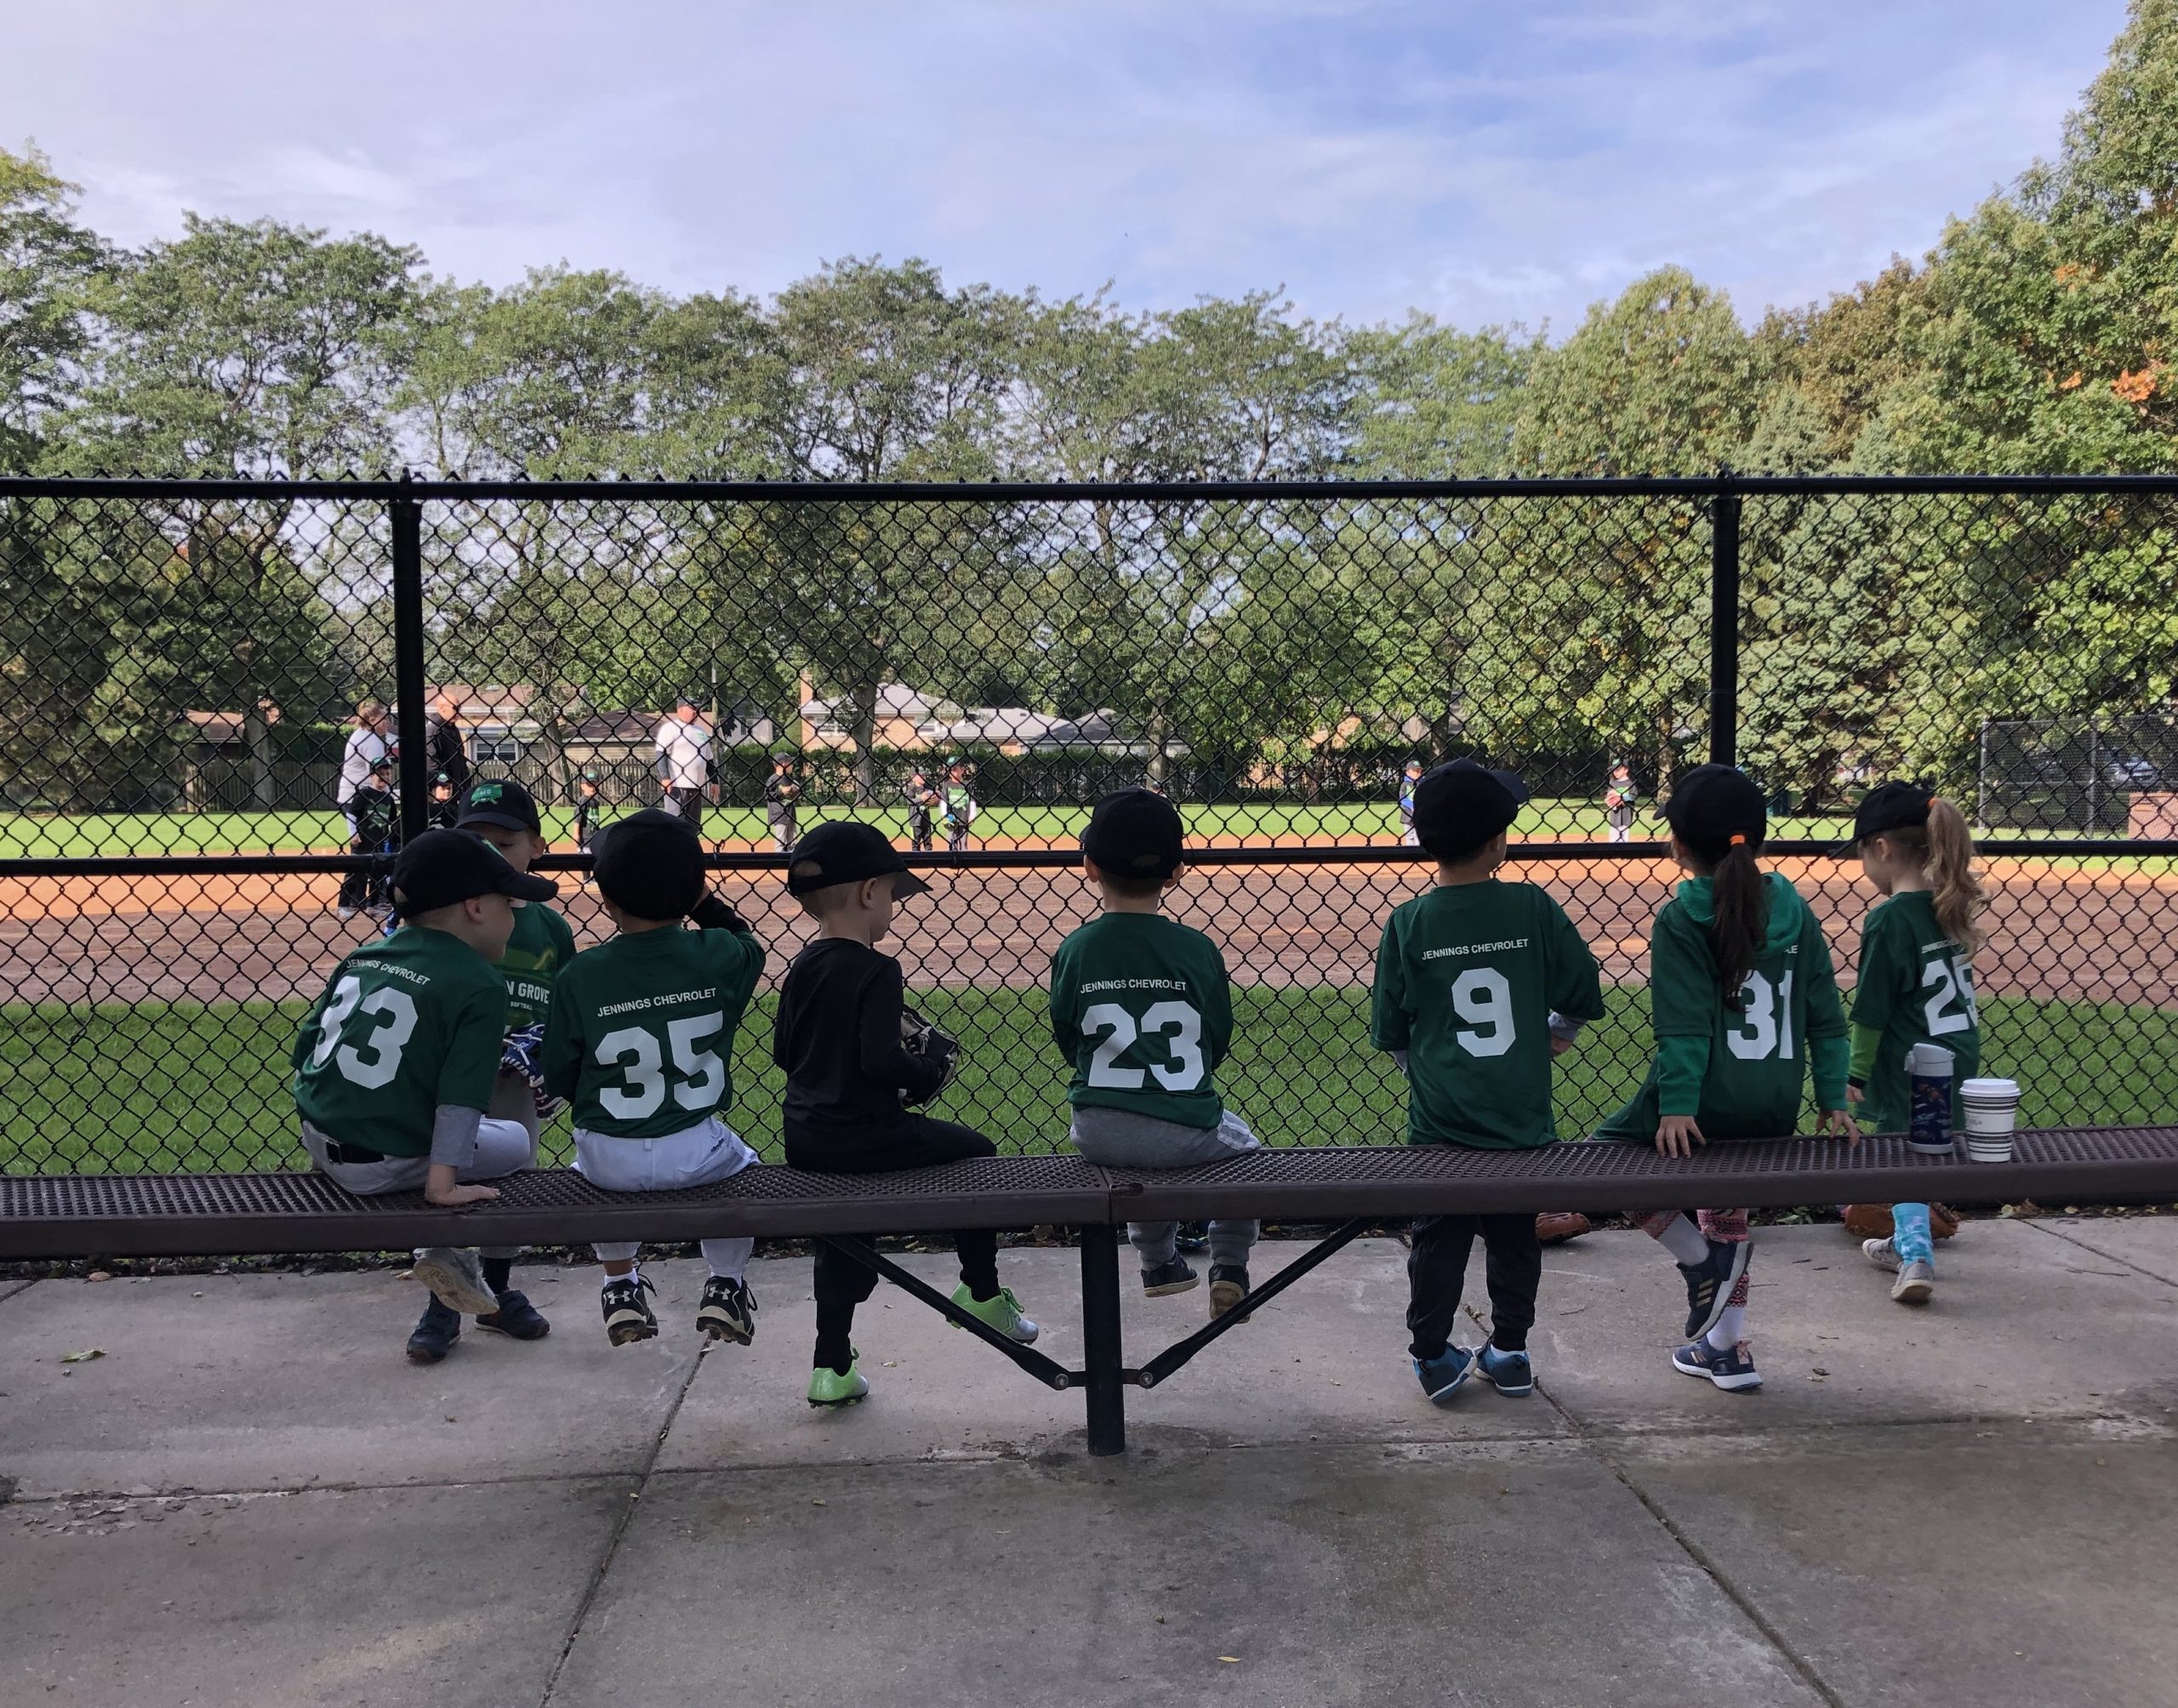 Kids sitting on a baseball bench waiting for tee ball